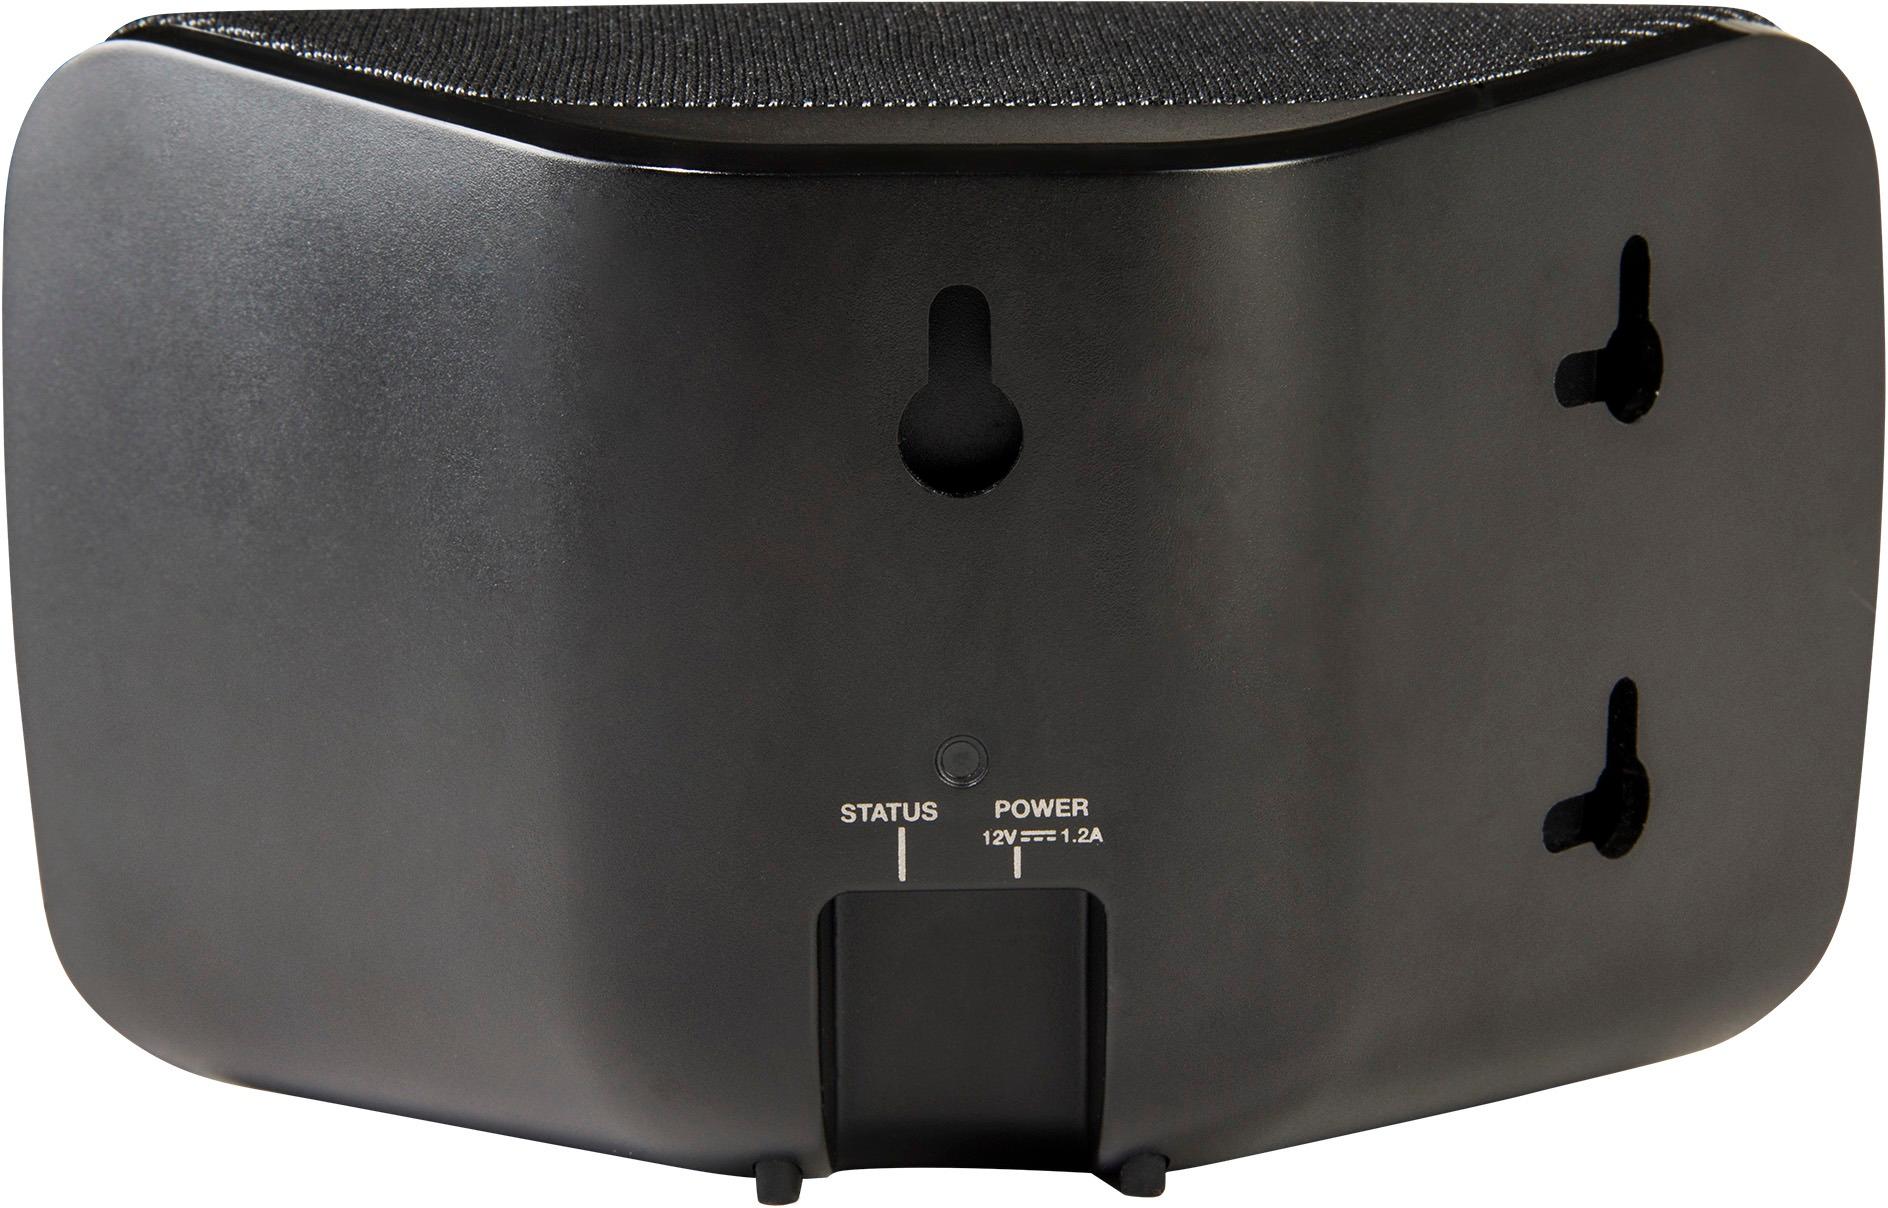 polk audio sr1 wireless rear surround speakers